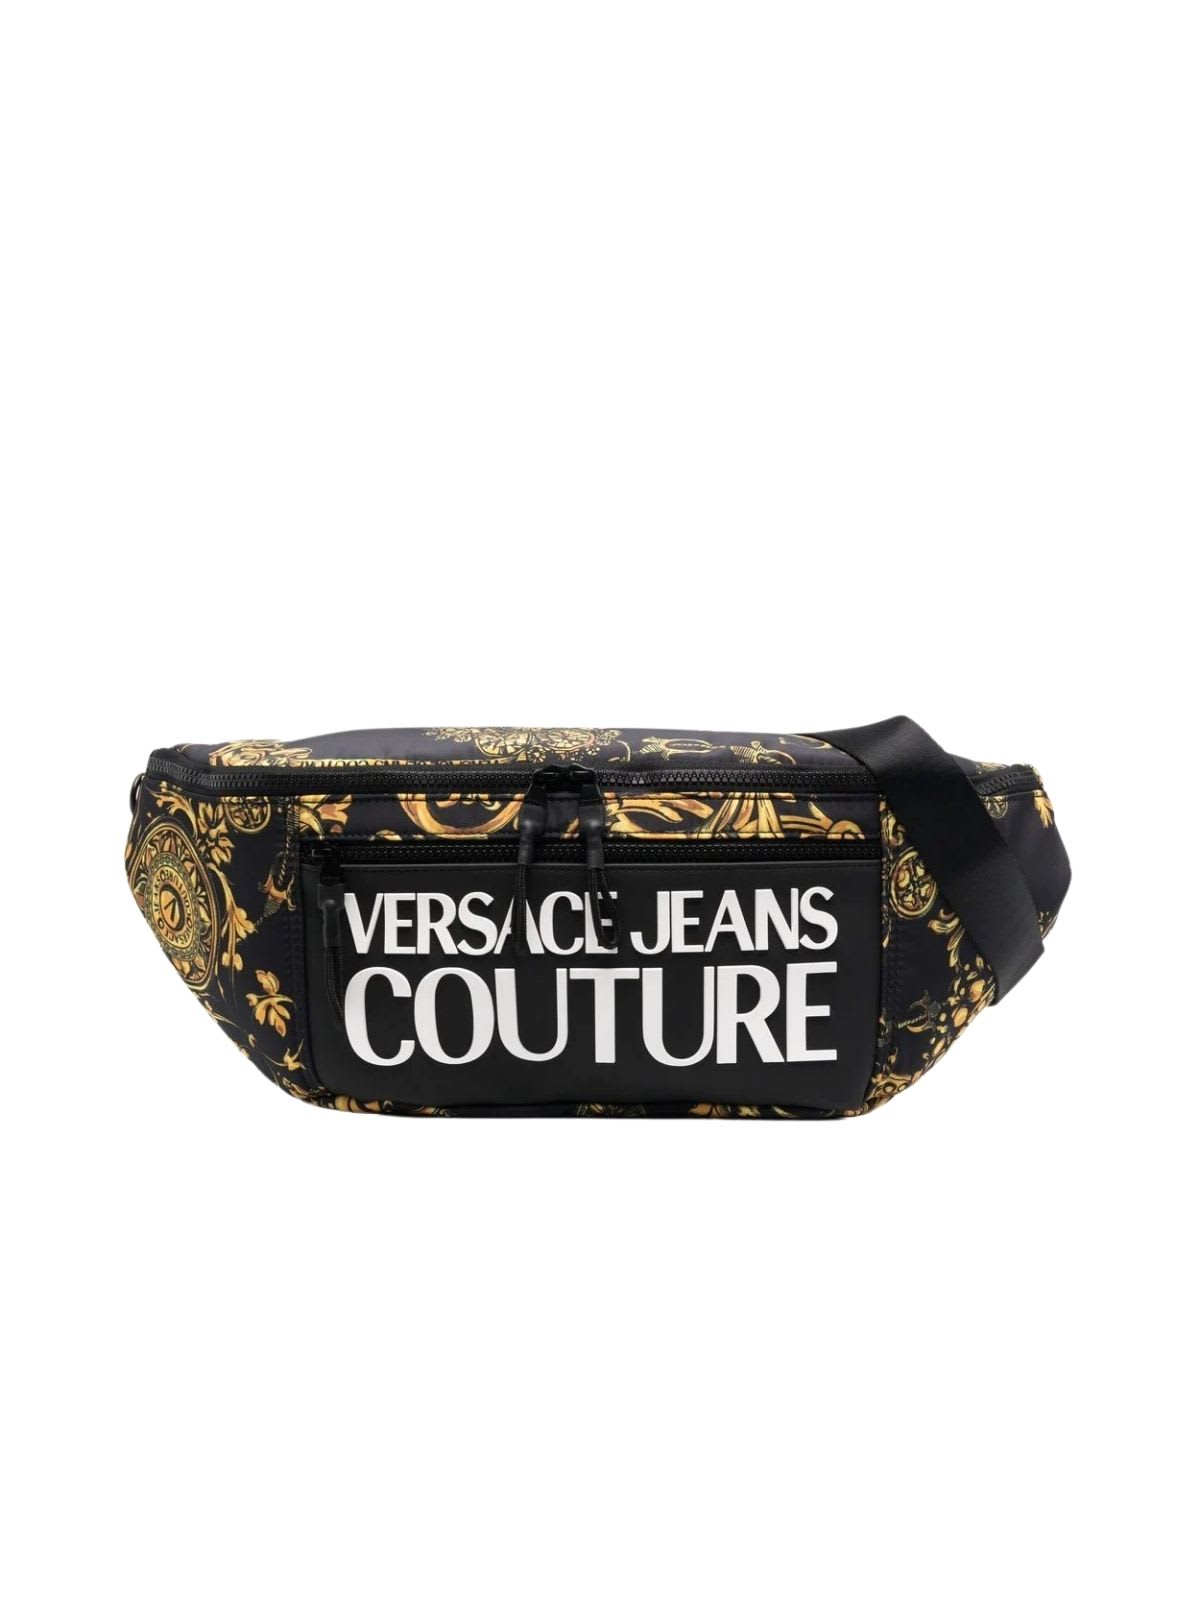 Versace Jeans Couture Sketch 7 Bags Printed Nylon Macrologo Belt Bag